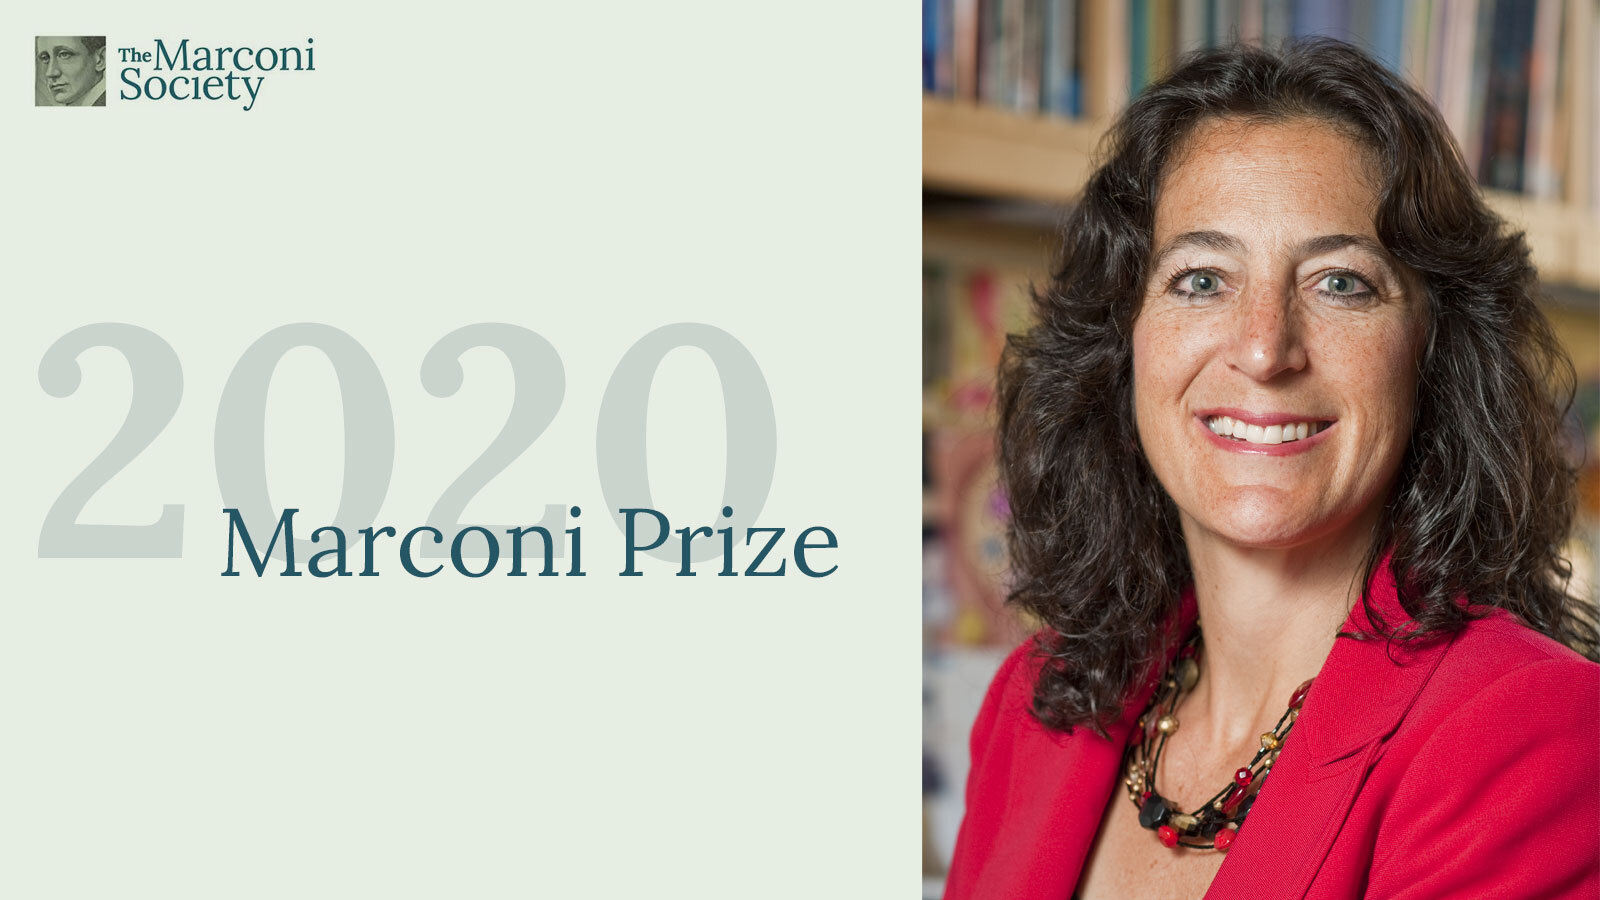 portrait photo with text "2020 Marconi Prize"